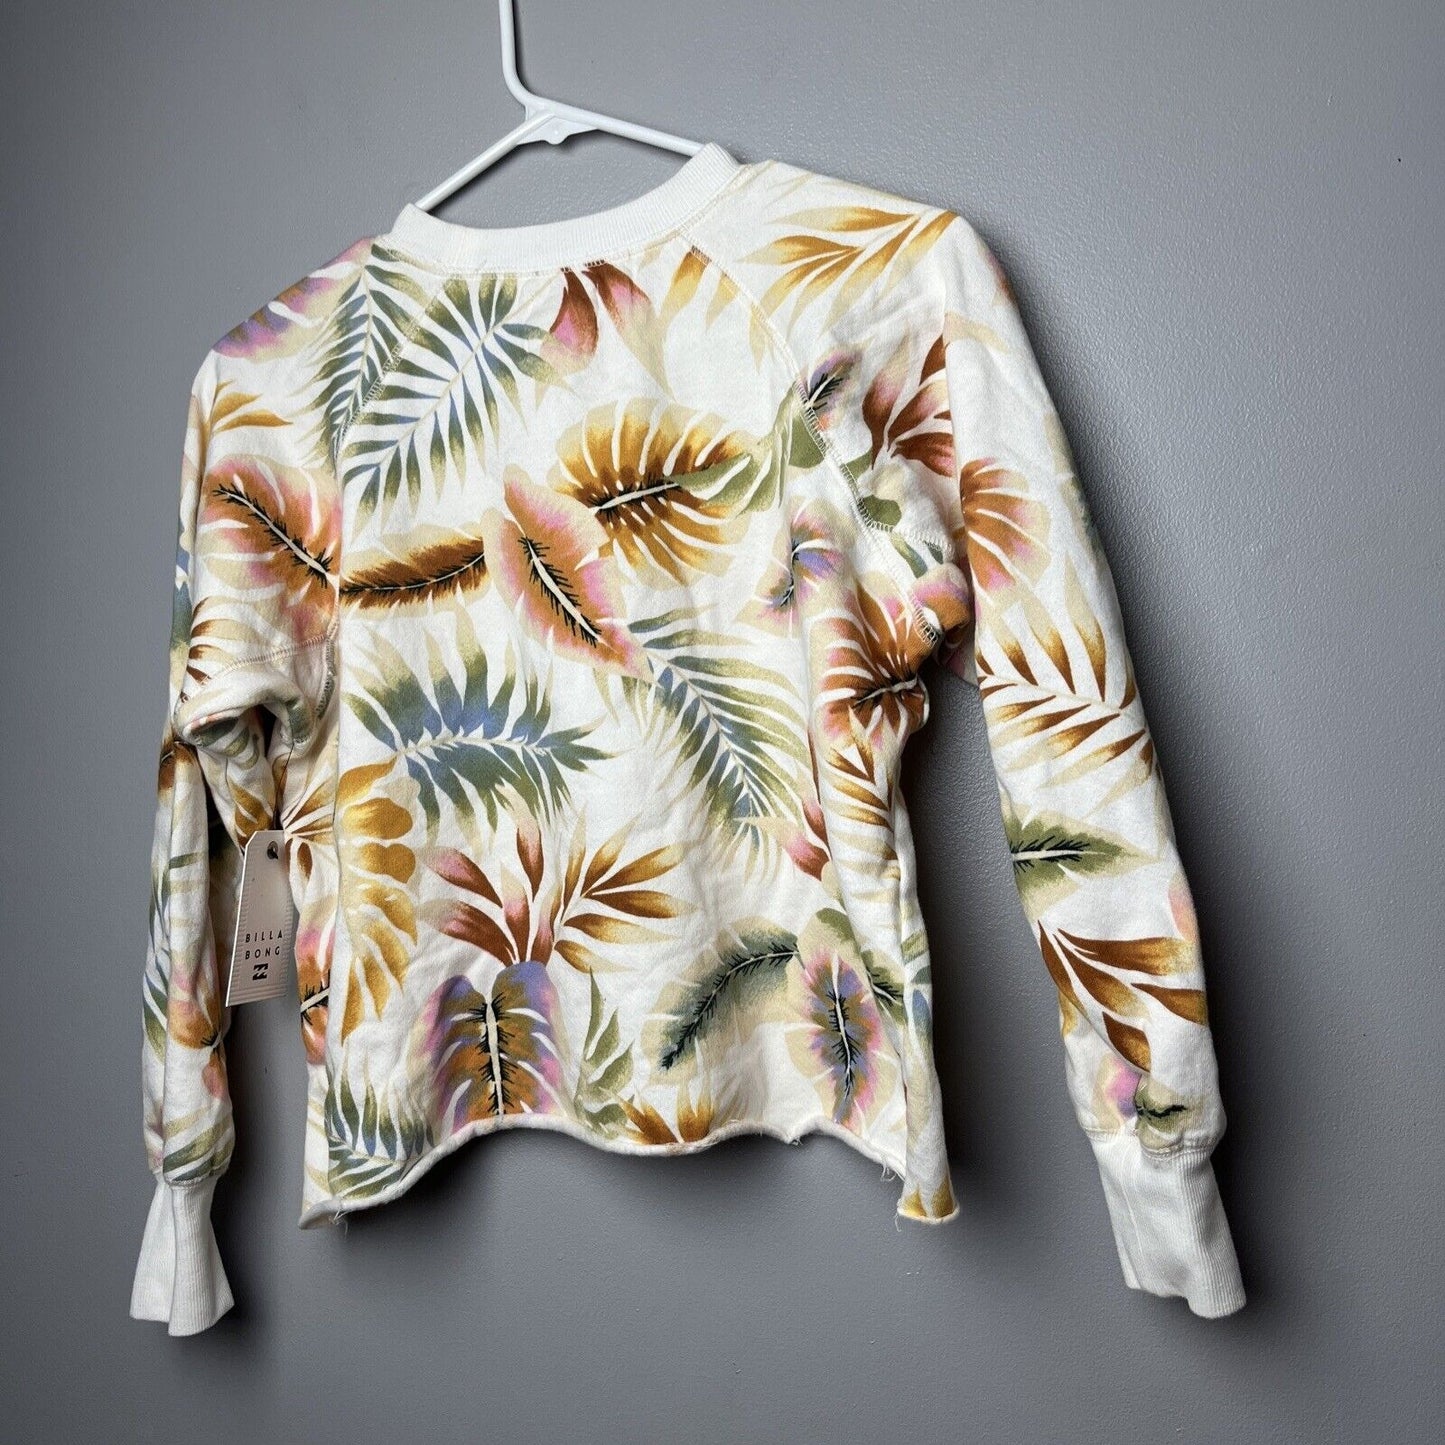 Billabong Women's Ivory Tropical Cut Off Crew Pullover Sweatshirt Size XS